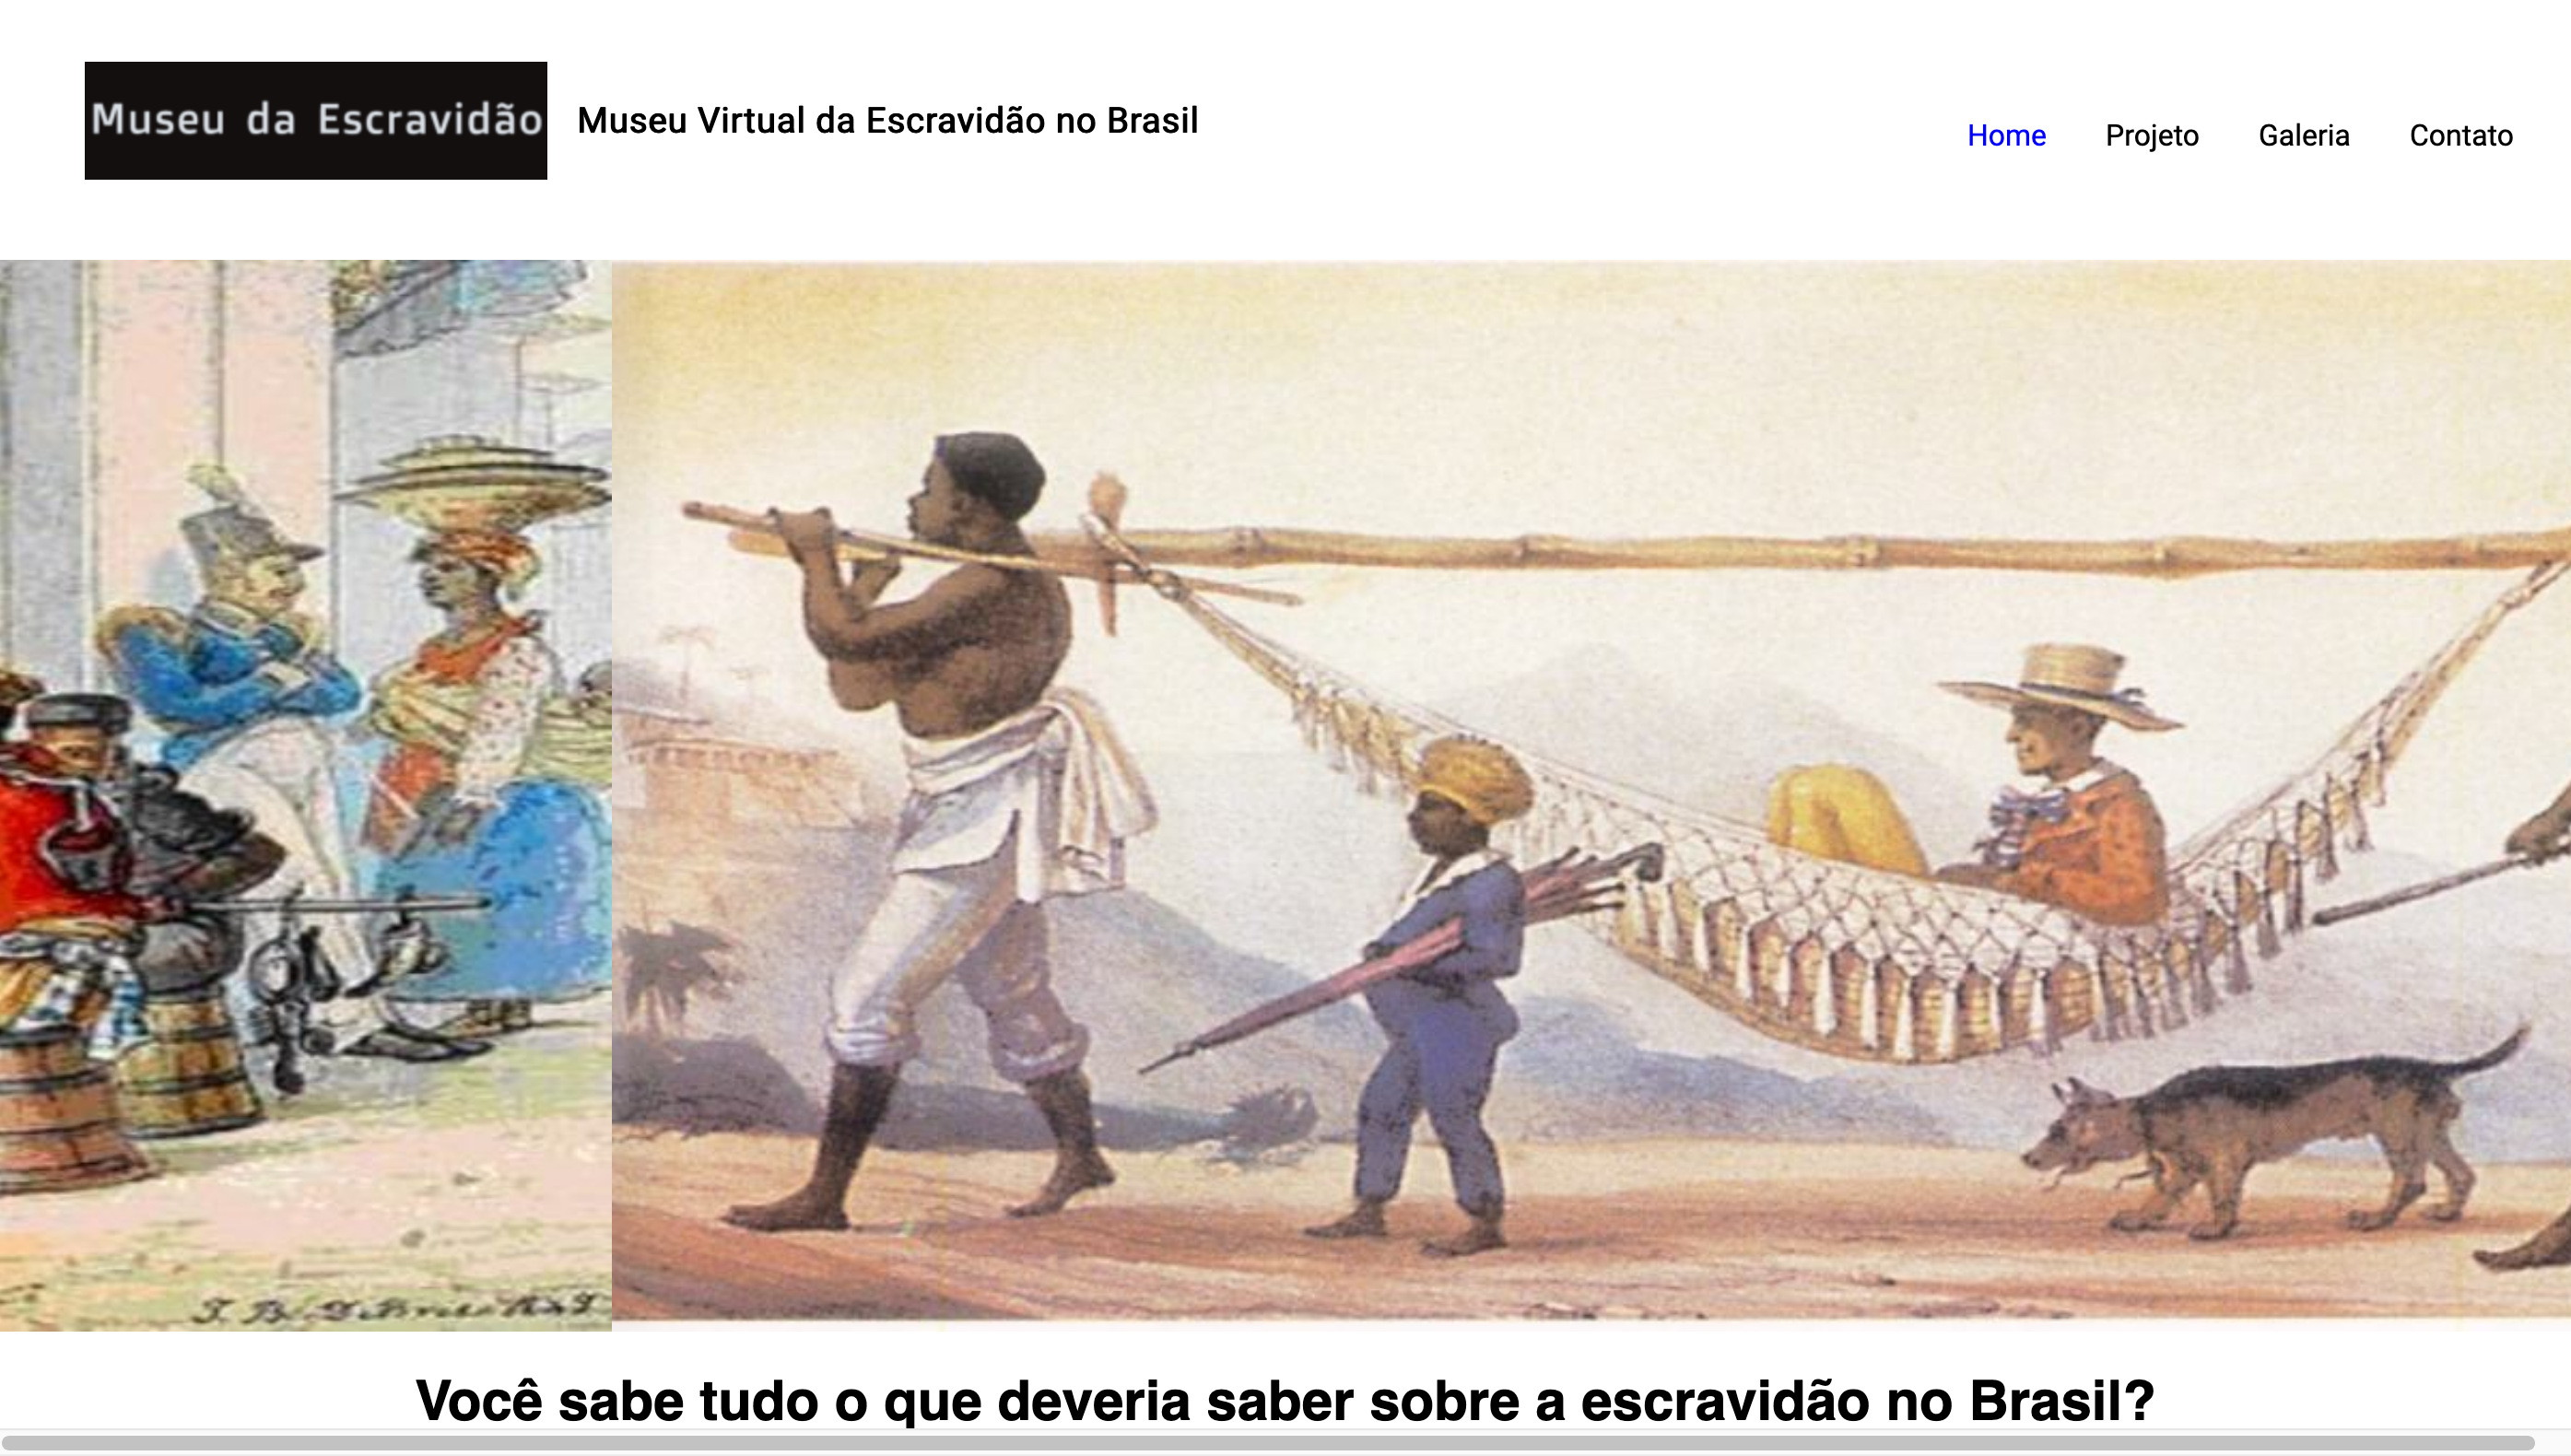 Virtual Museum of Slavery in Brazil